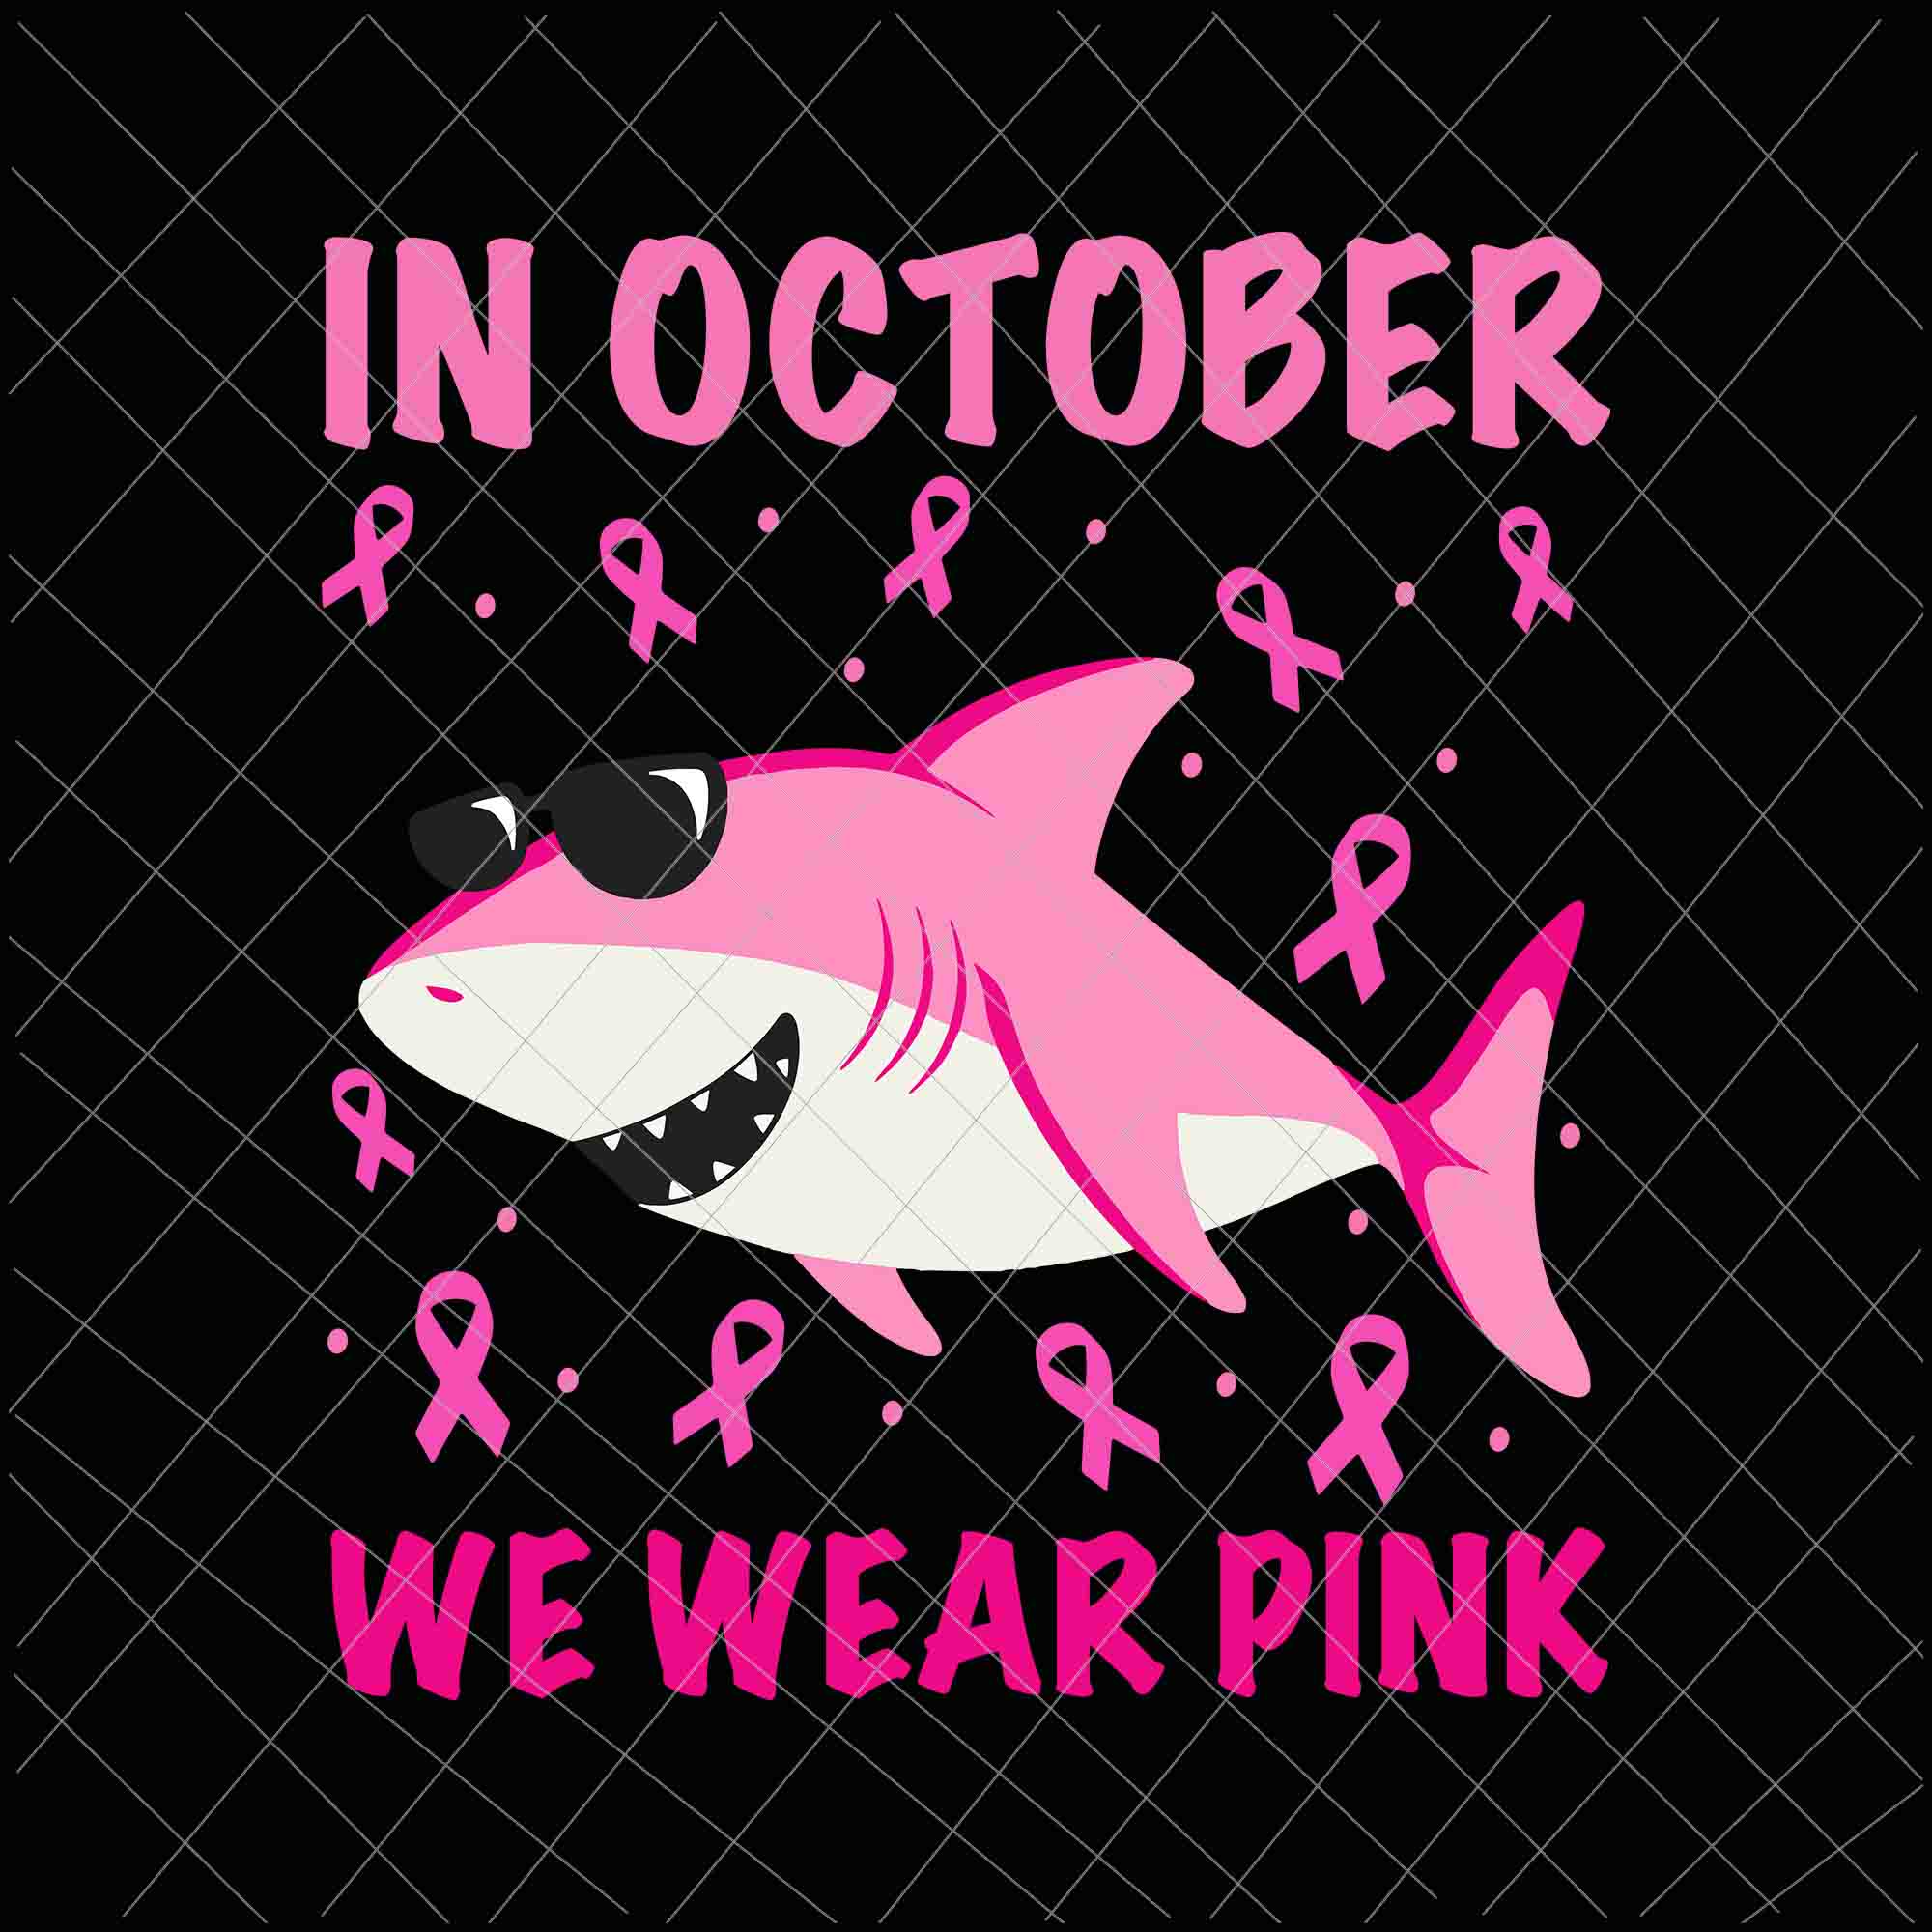 Shark In October We Wear Pink Svg, Breast Cancer Shark Svg, In October Shark Svg, Pink Shark Svg